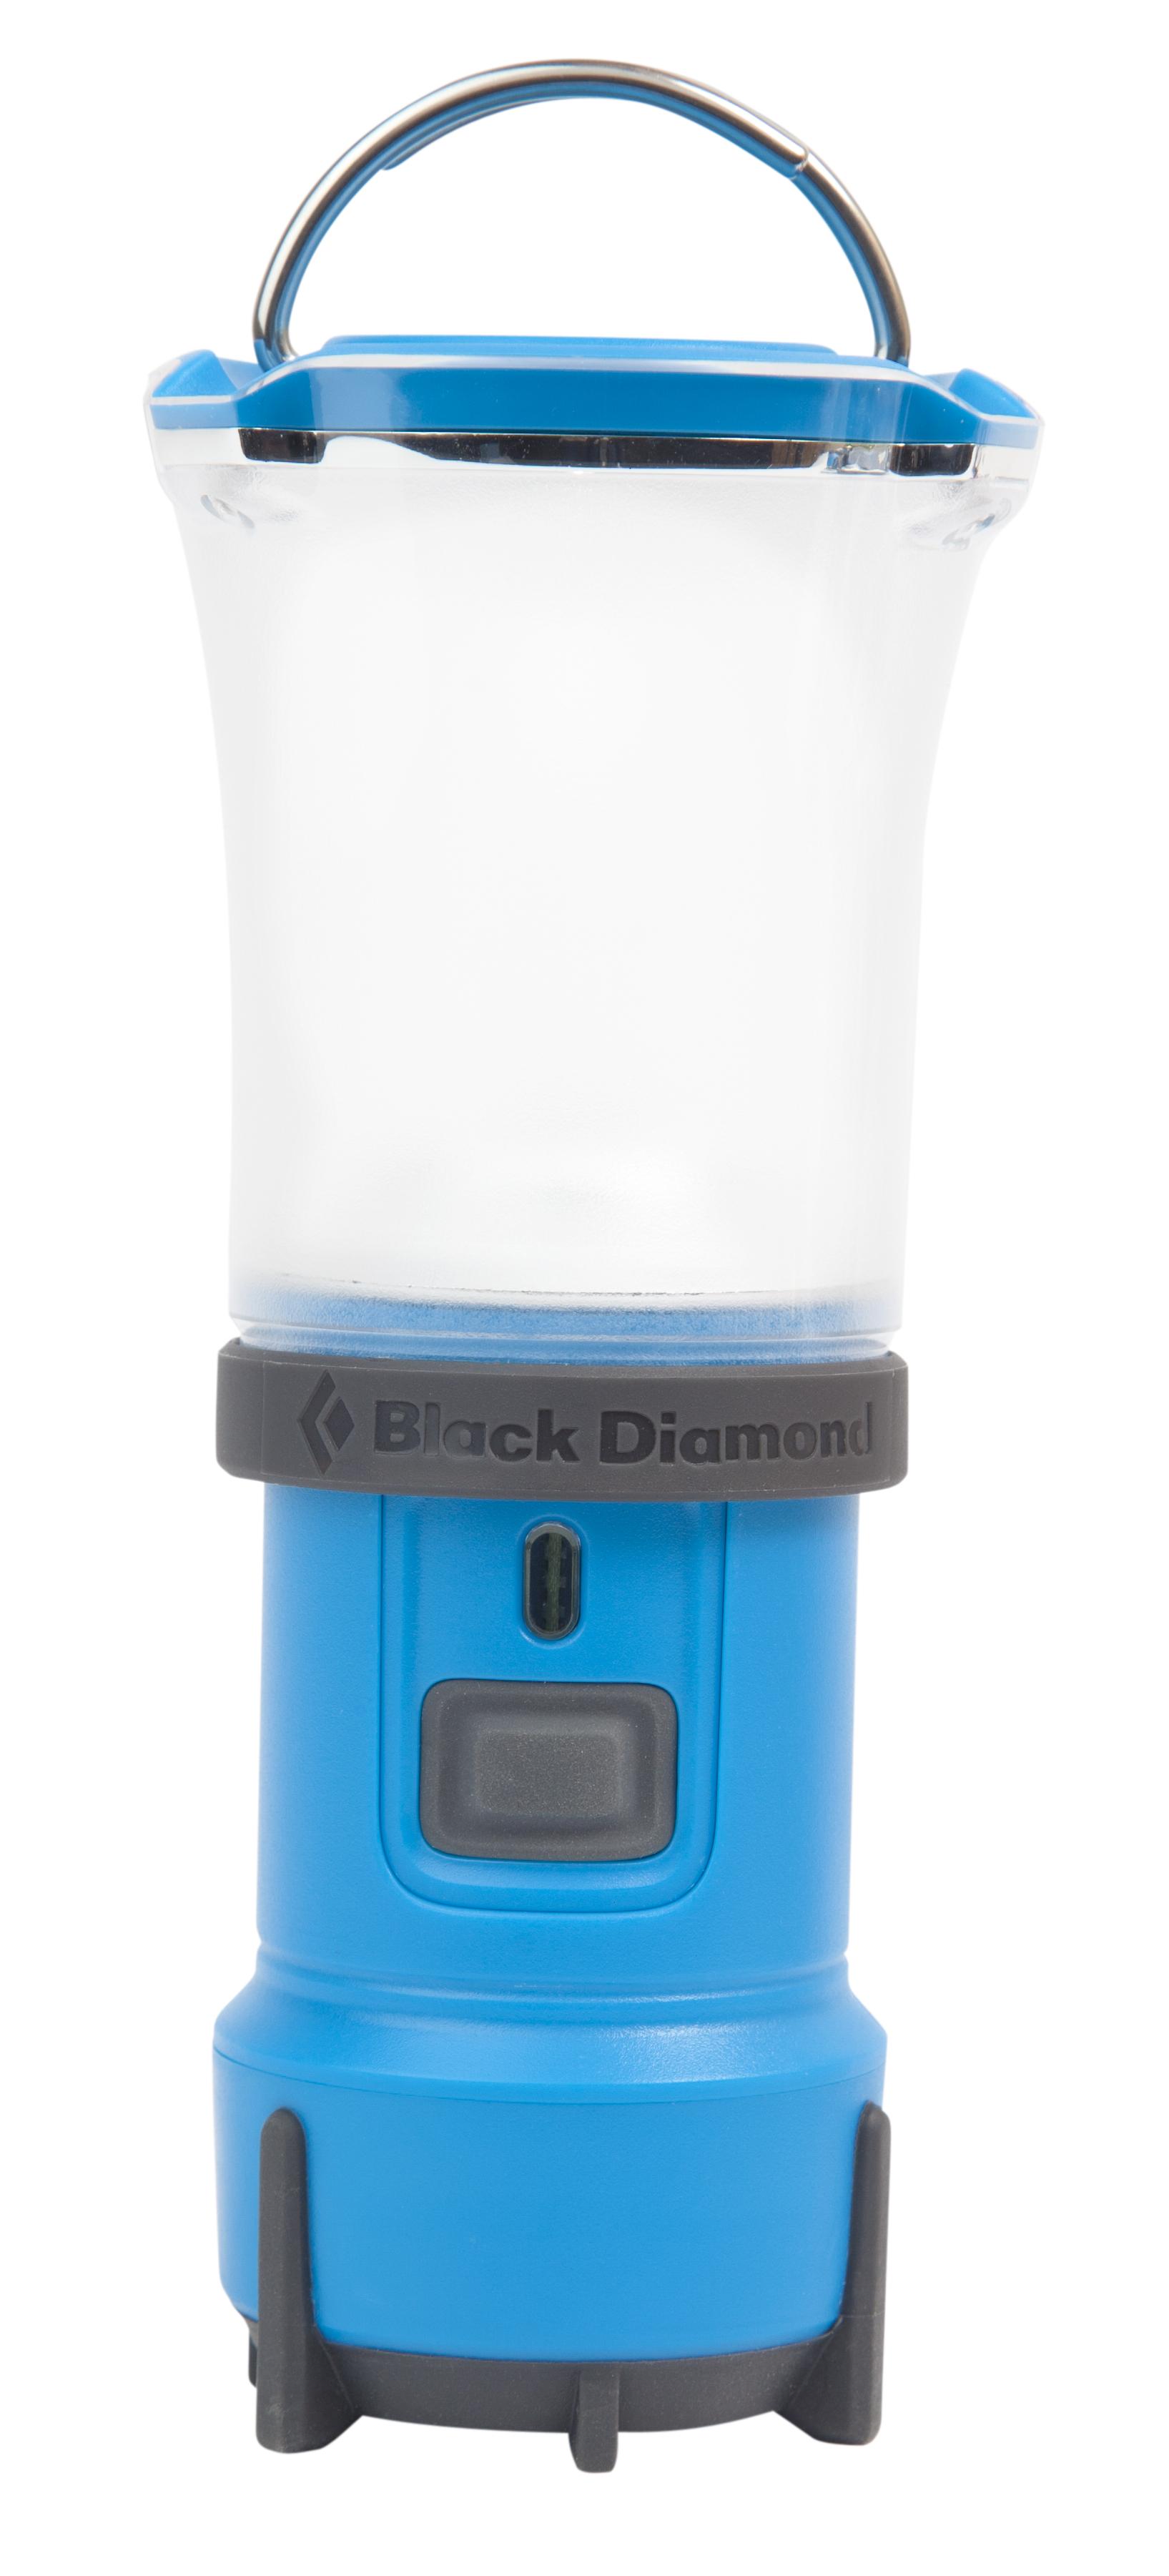 Foto Black Diamond Voyager Dark Process Blue (Modell 2013)